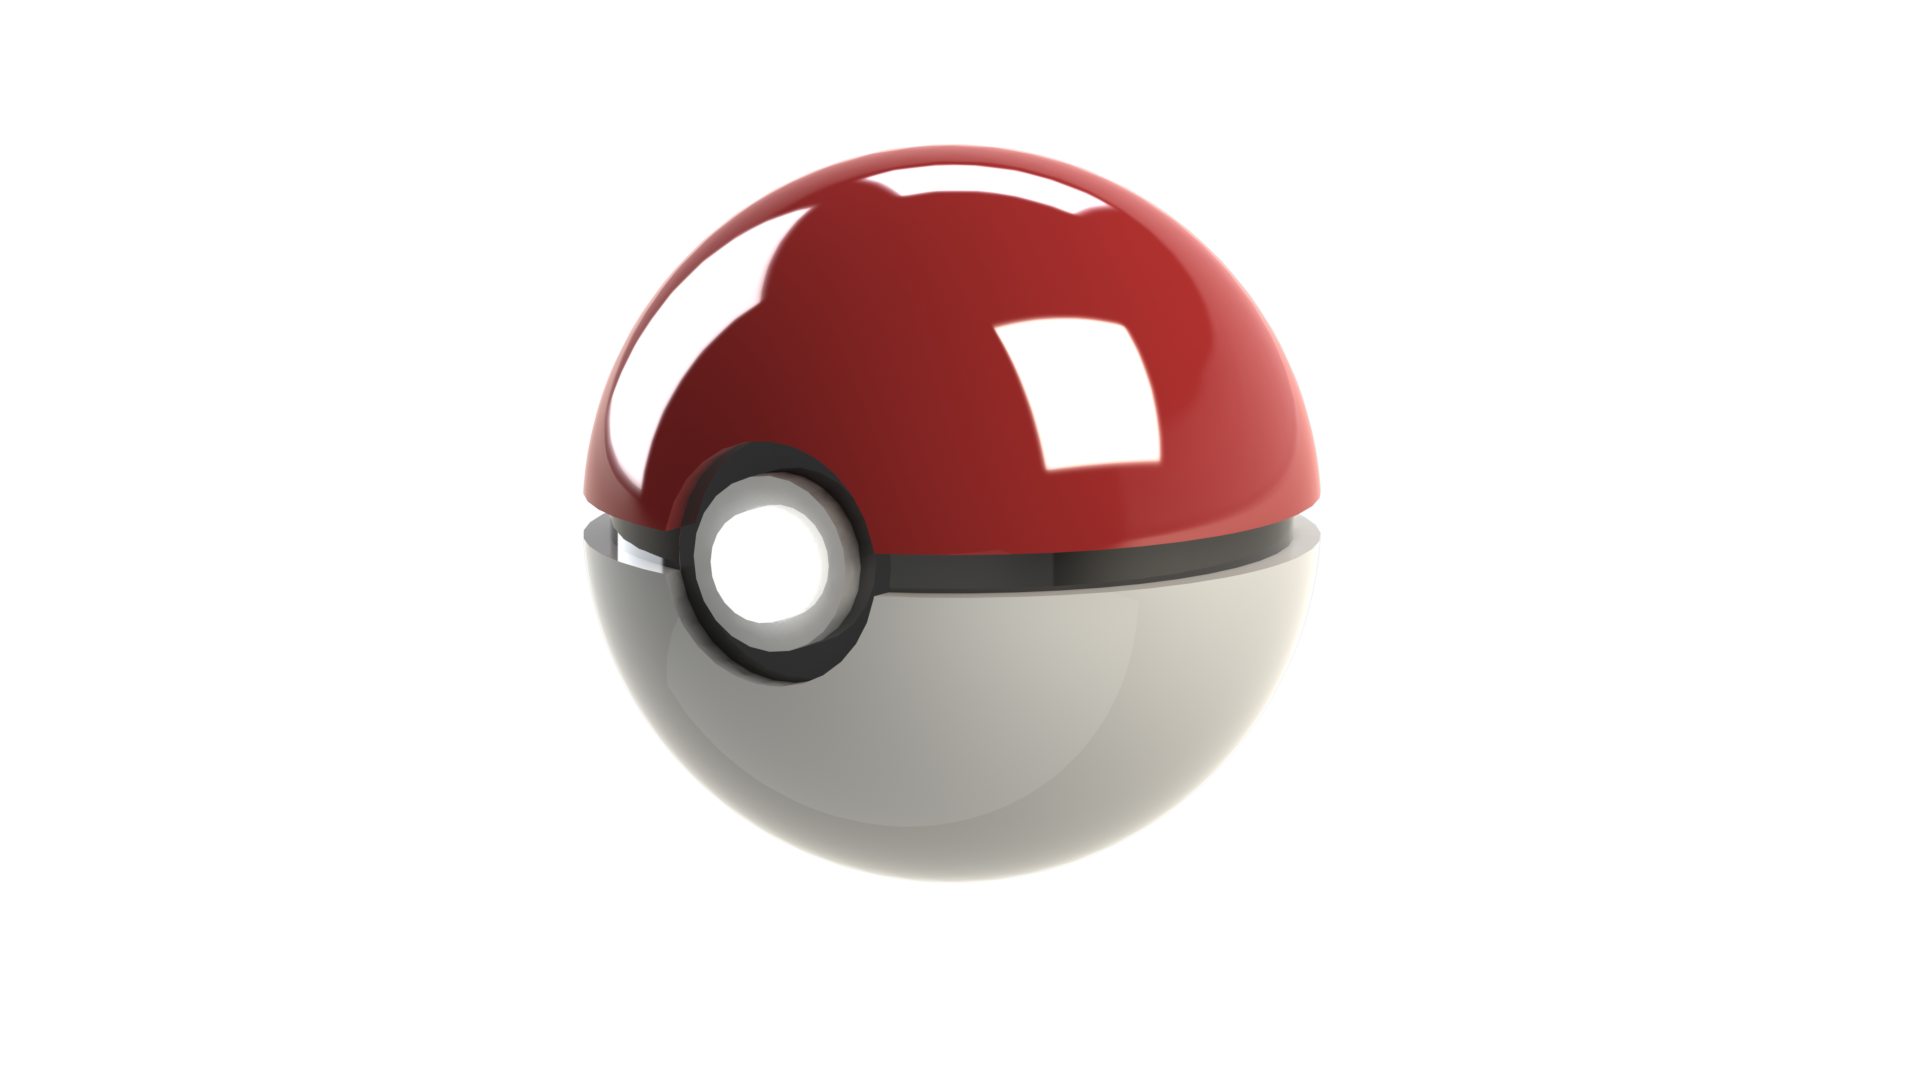 Free: Pokeball Transparent Png - Pokeball Png Pokemon Go 